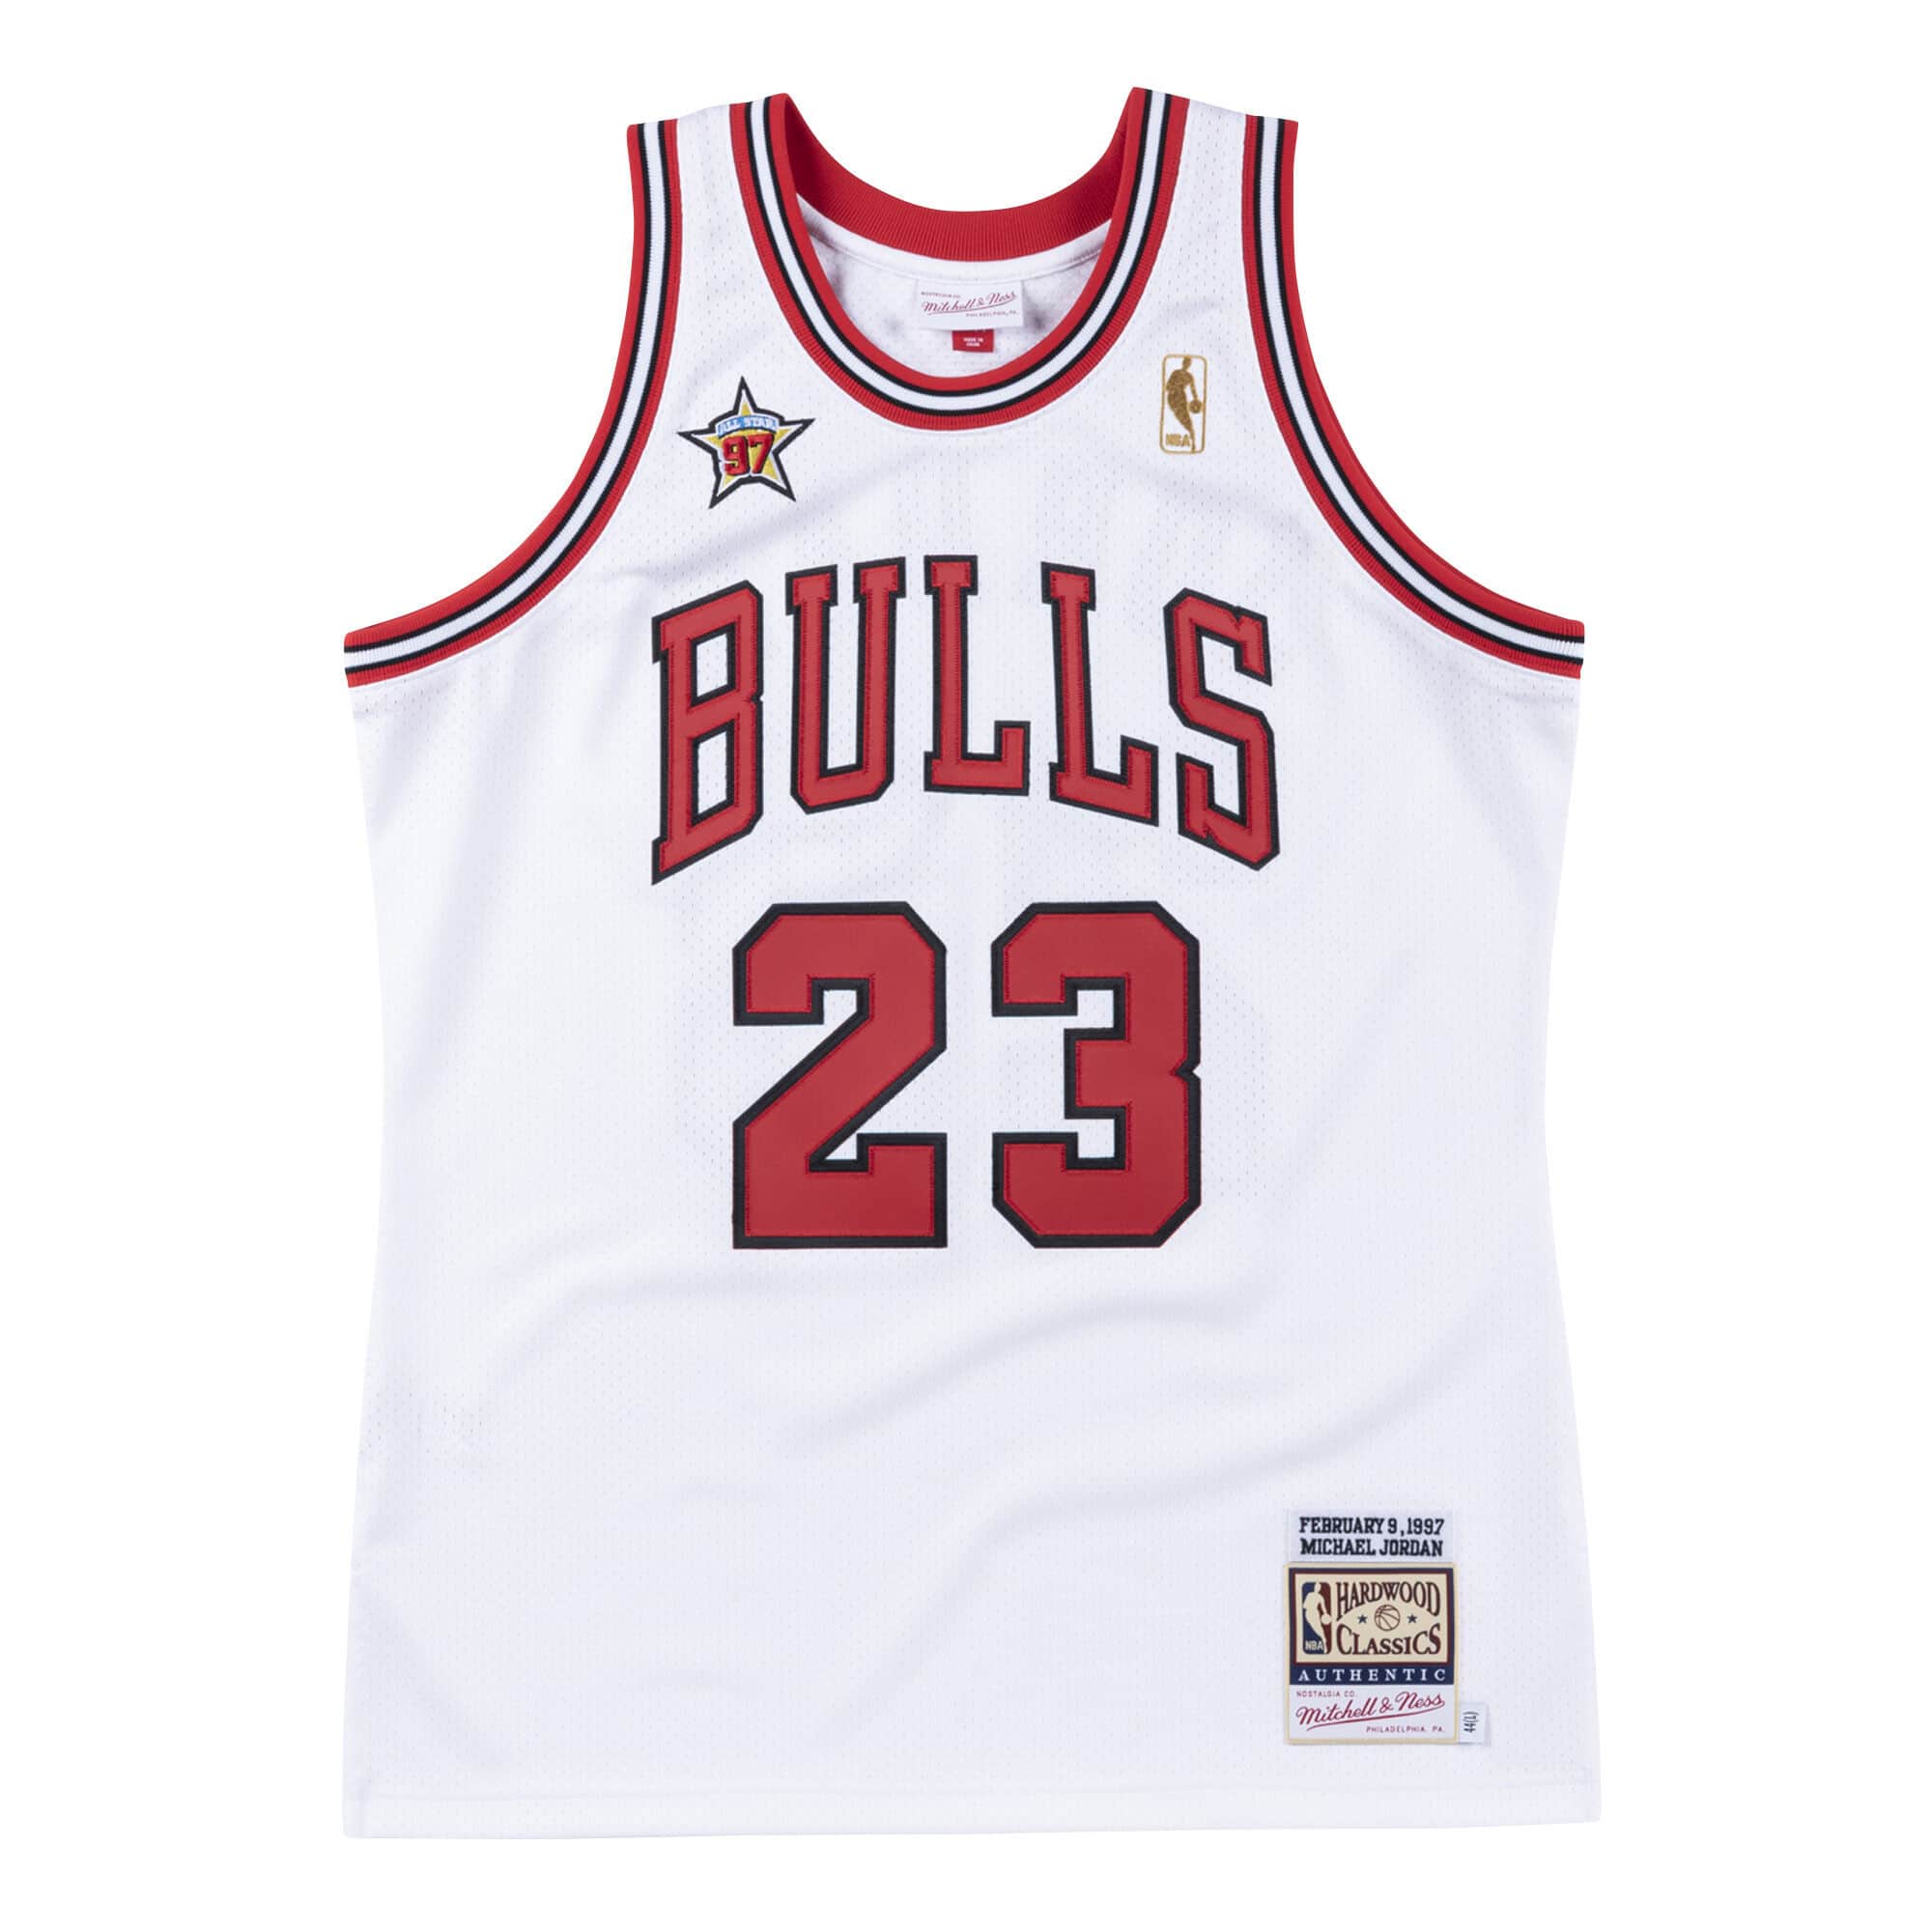 Jersey Chicago Bulls 1997-98 Michael Jordan